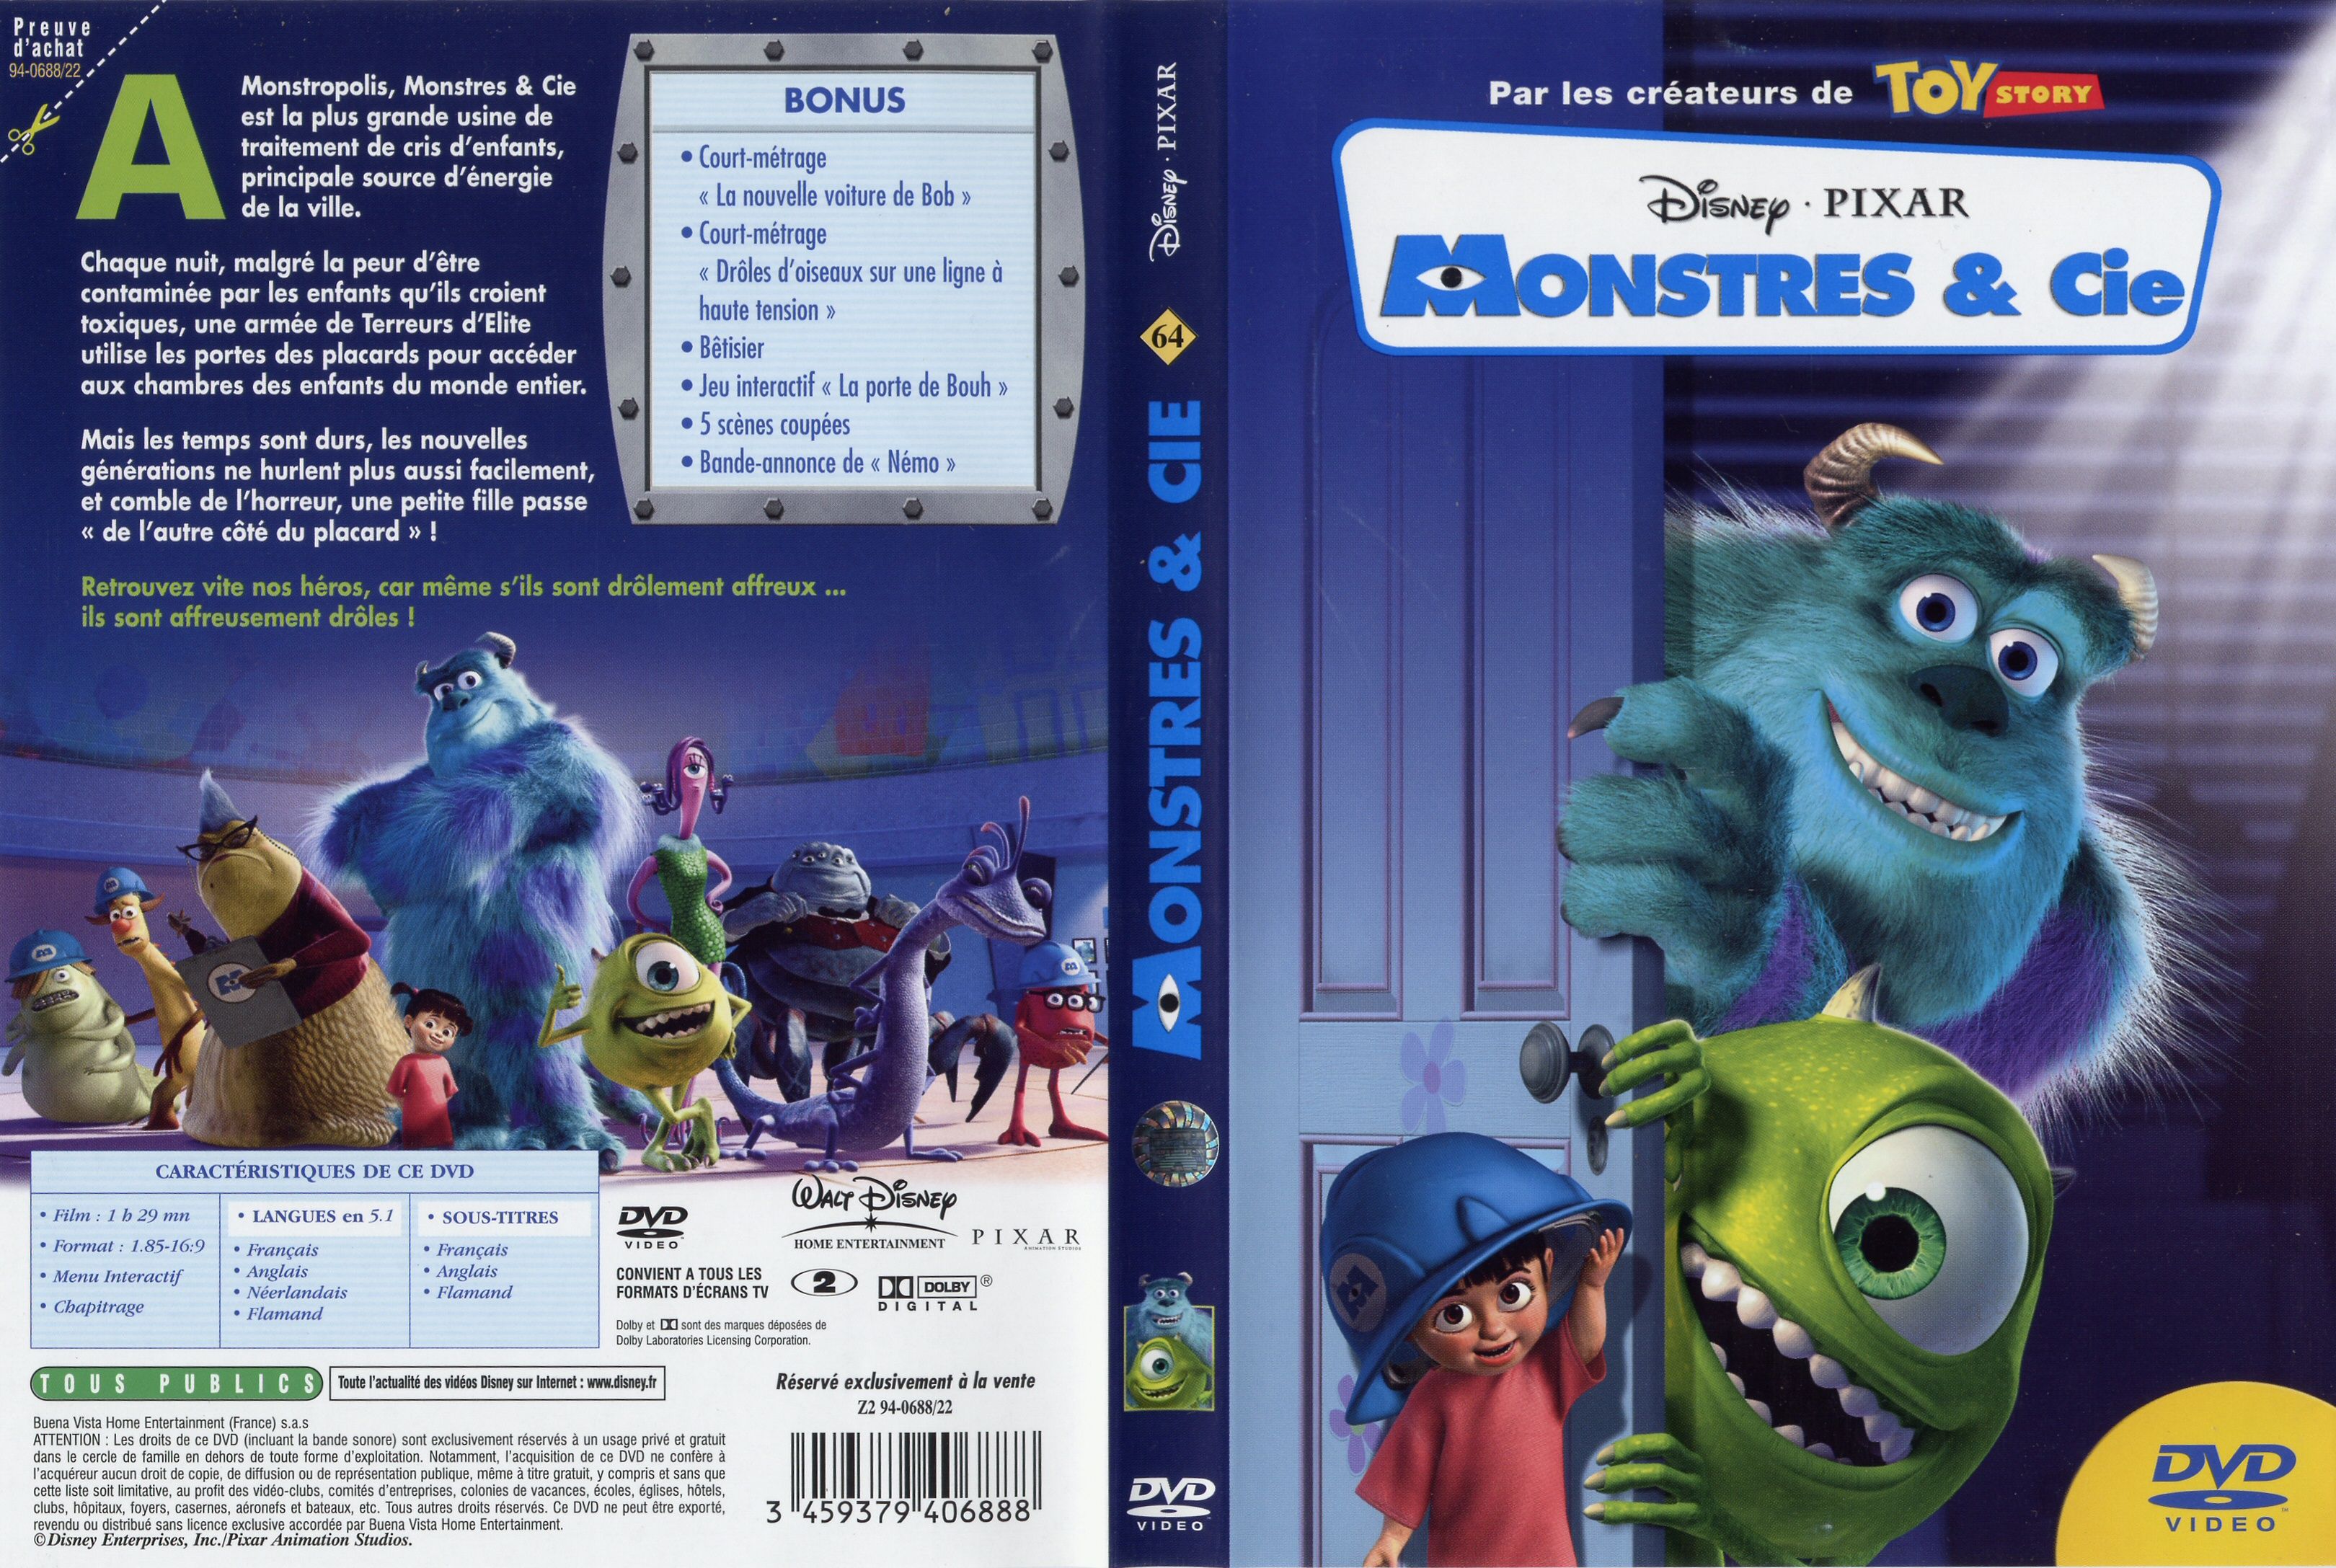 Jaquette DVD Monstres et Cie v2